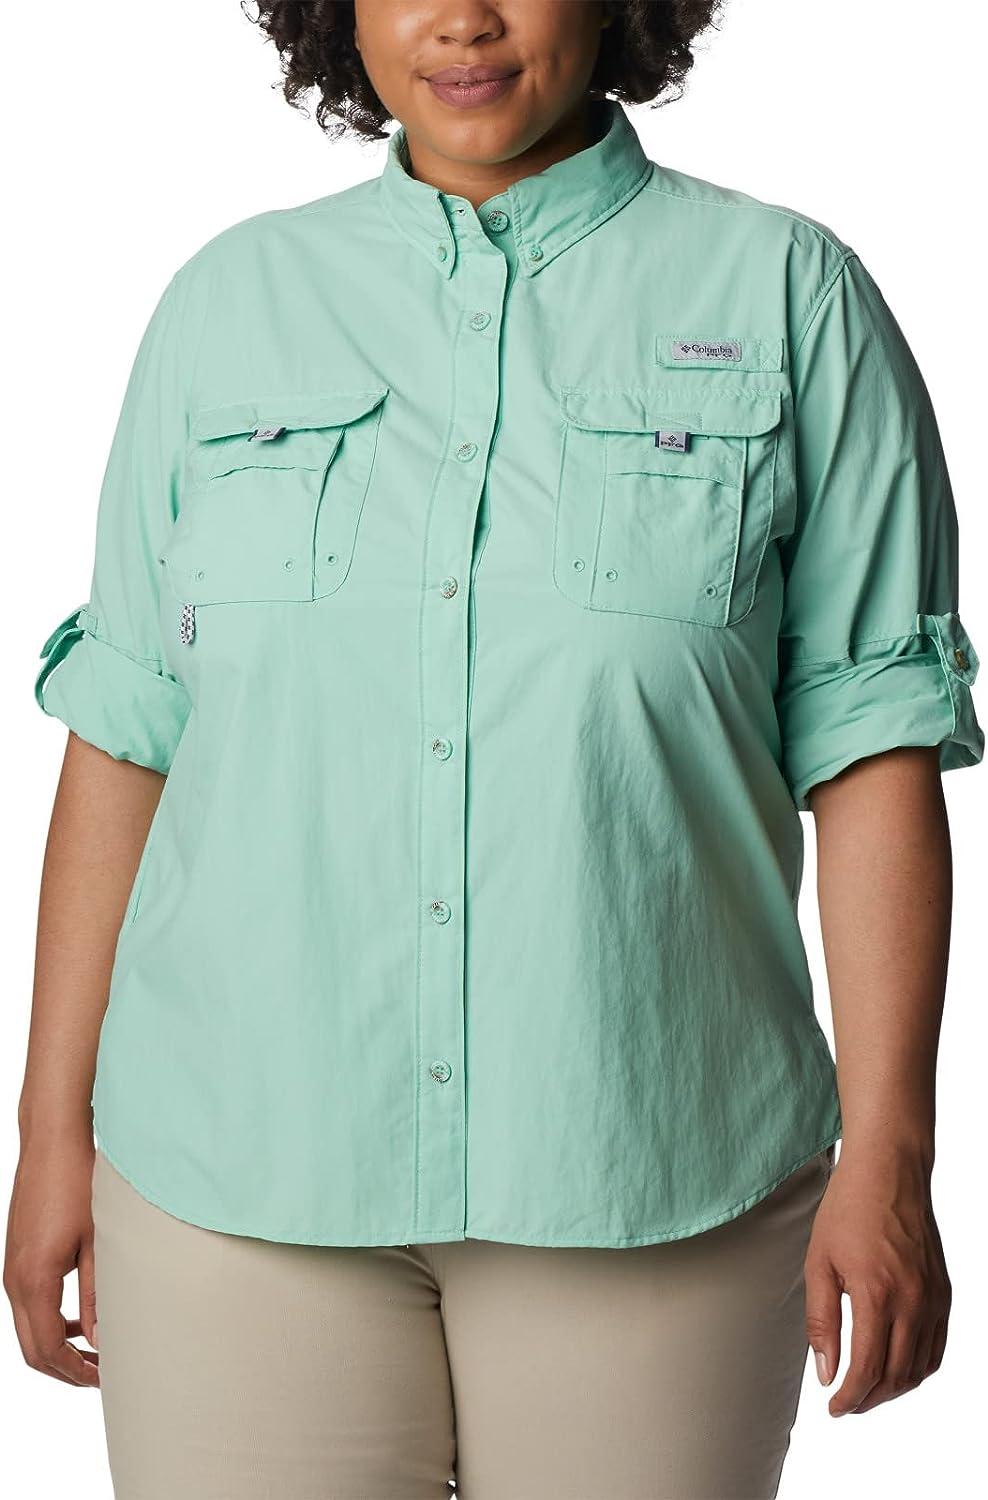 Columbia Women's PFG Bahama Ii UPF 30 Long Sleeve Fishing Shirt